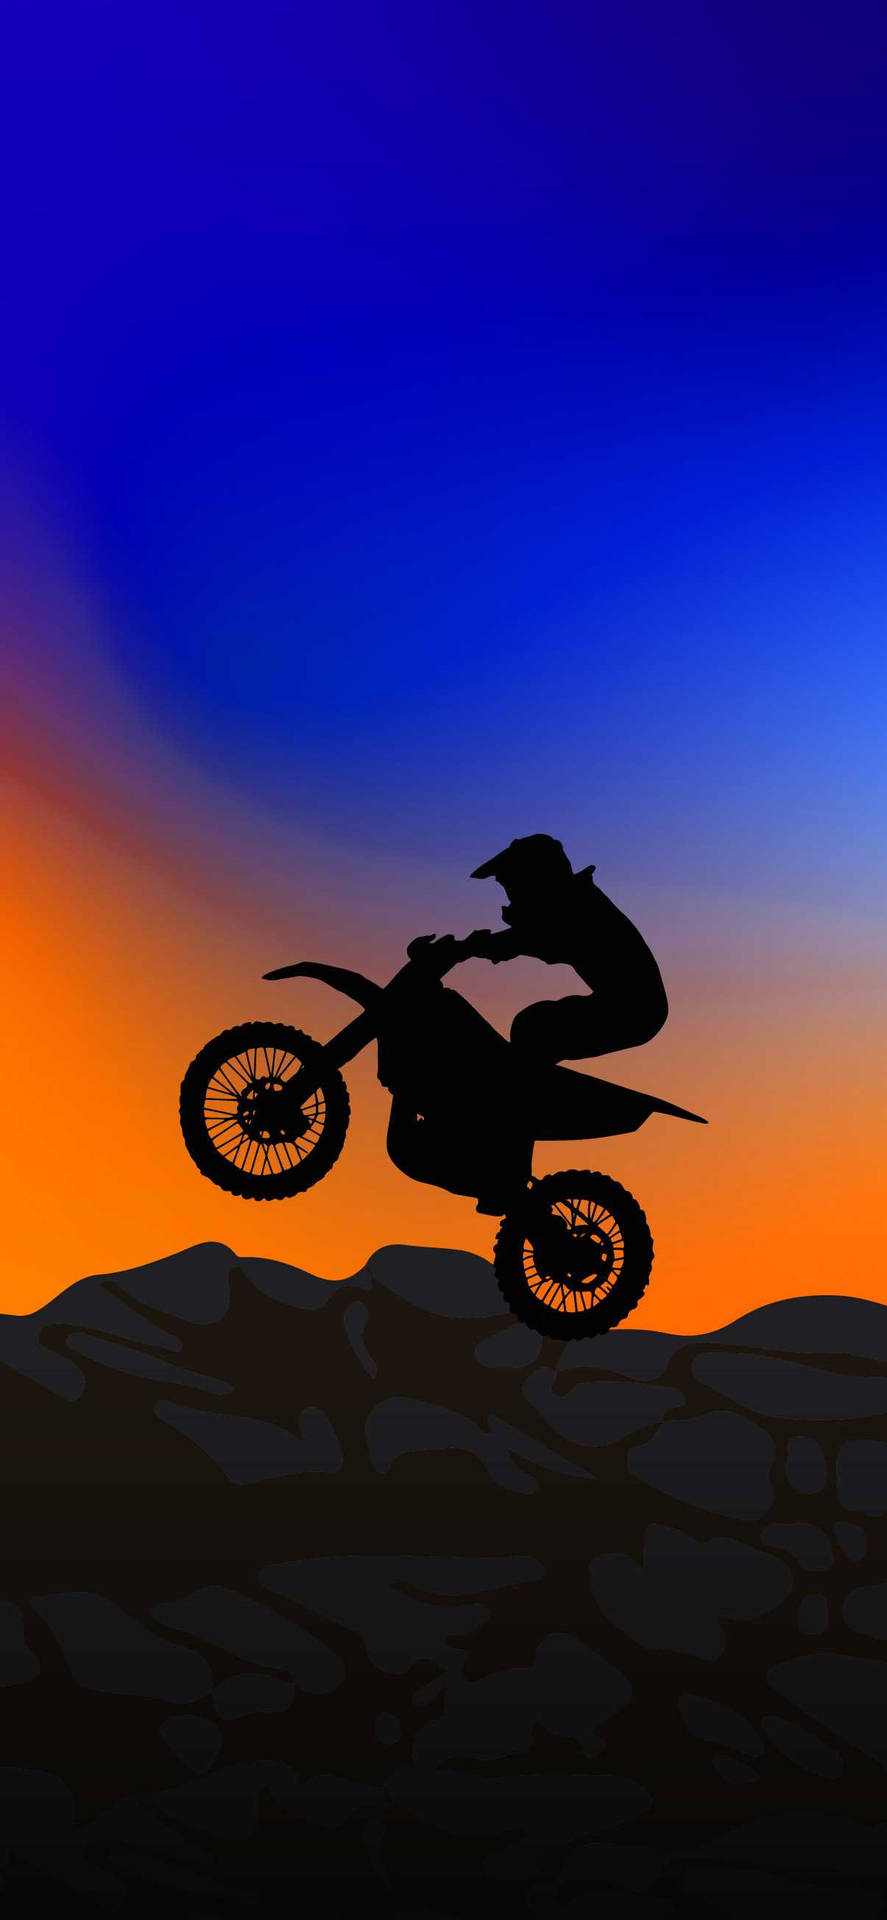 Caption: Extreme Thrill - Dirt bike silhouette taking flight at sunset Wallpaper